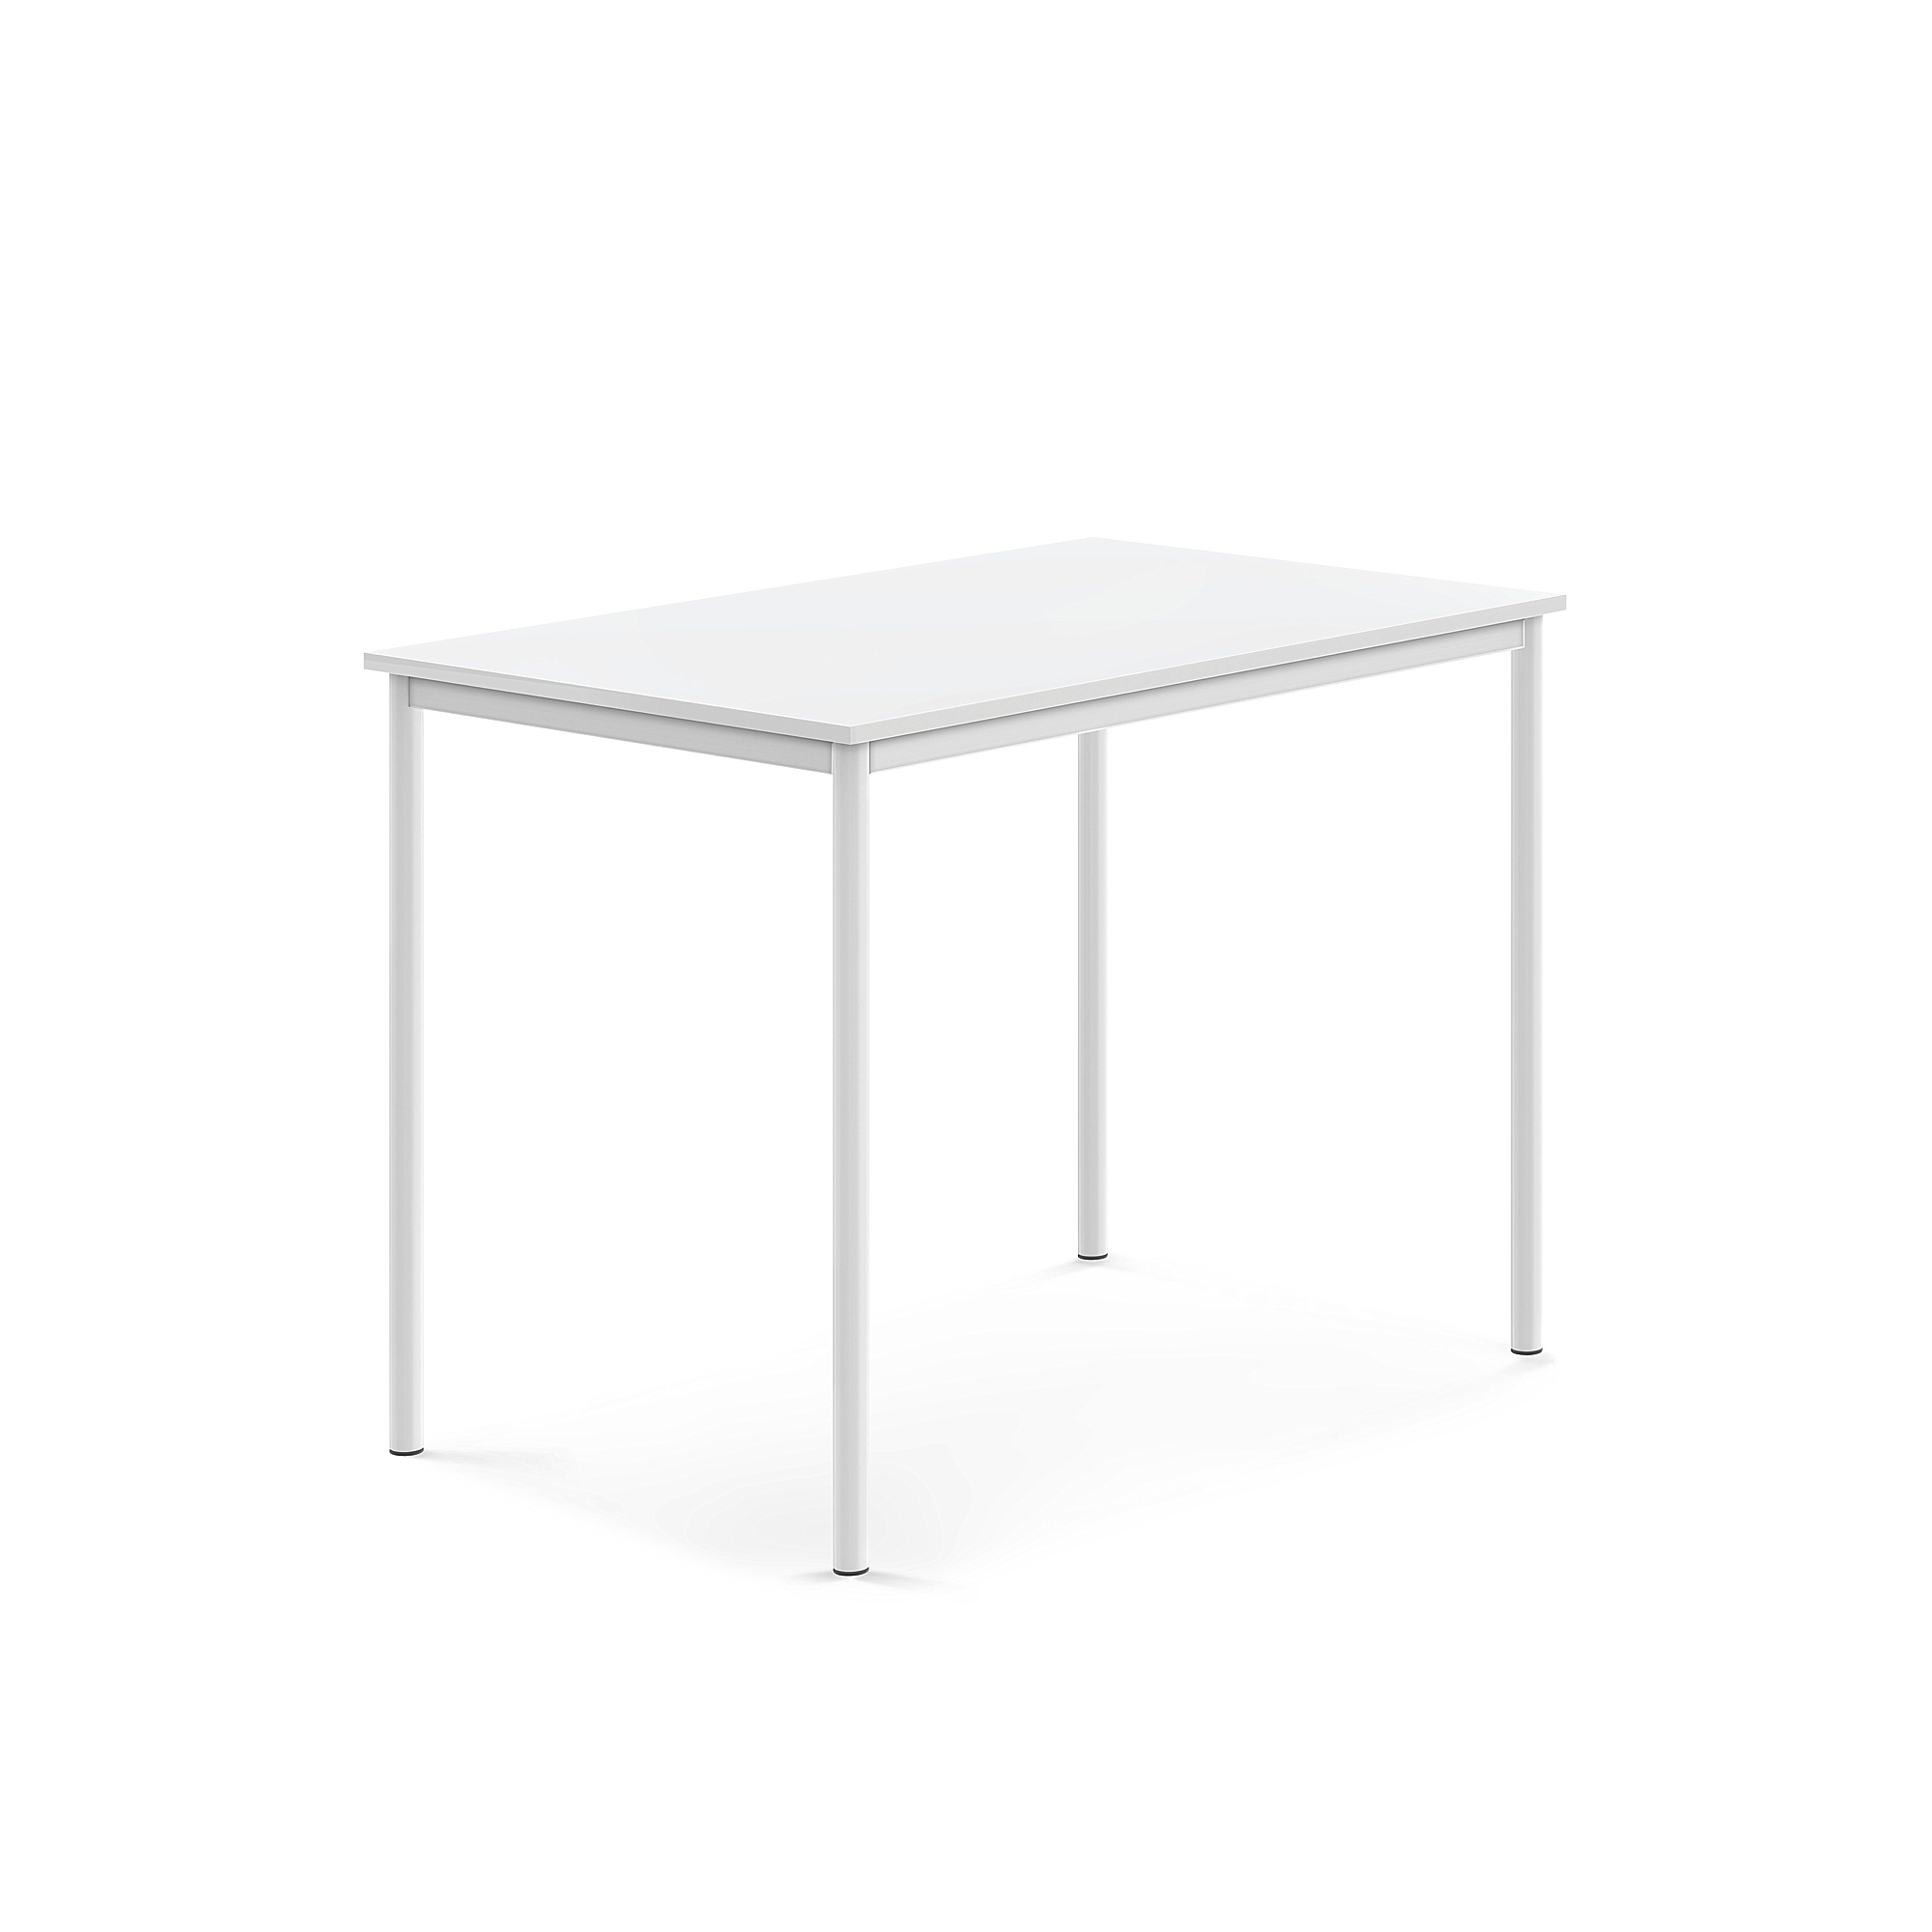 Stůl SONITUS, 1200x800x900 mm, bílé nohy, HPL deska tlumící hluk, bílá